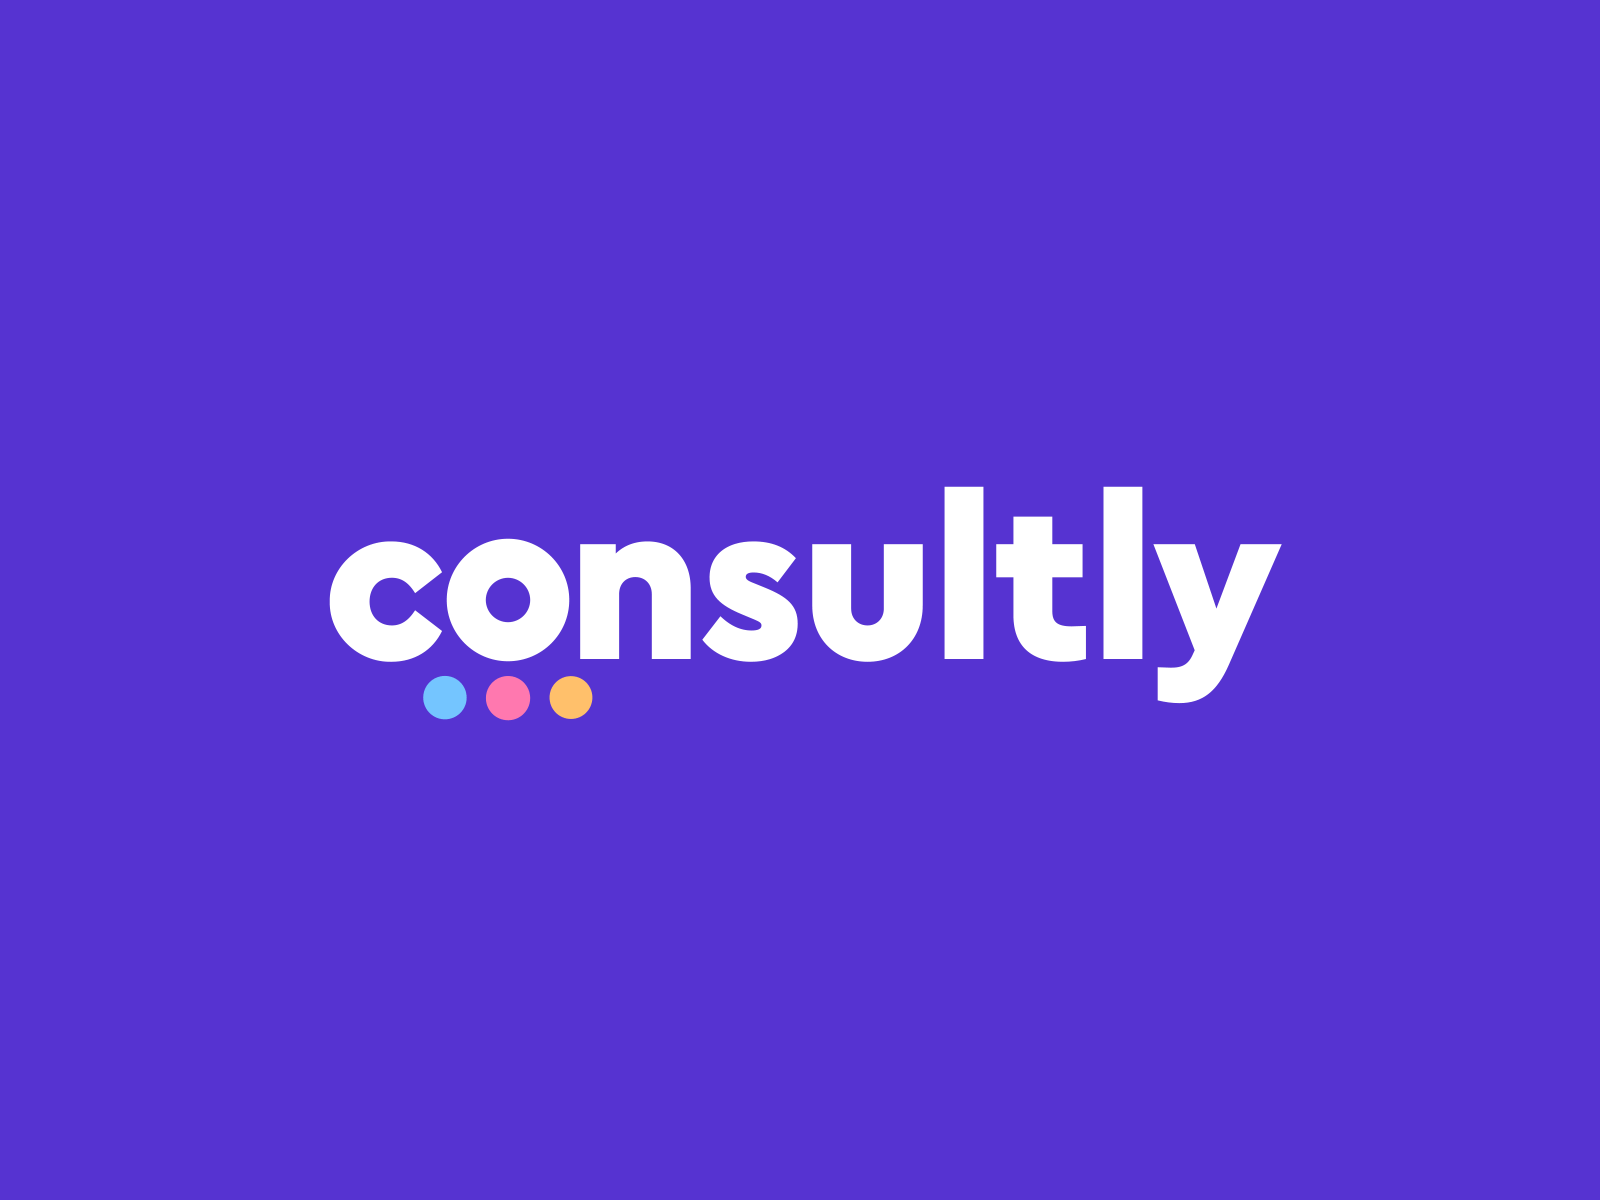 Consultly logo animation